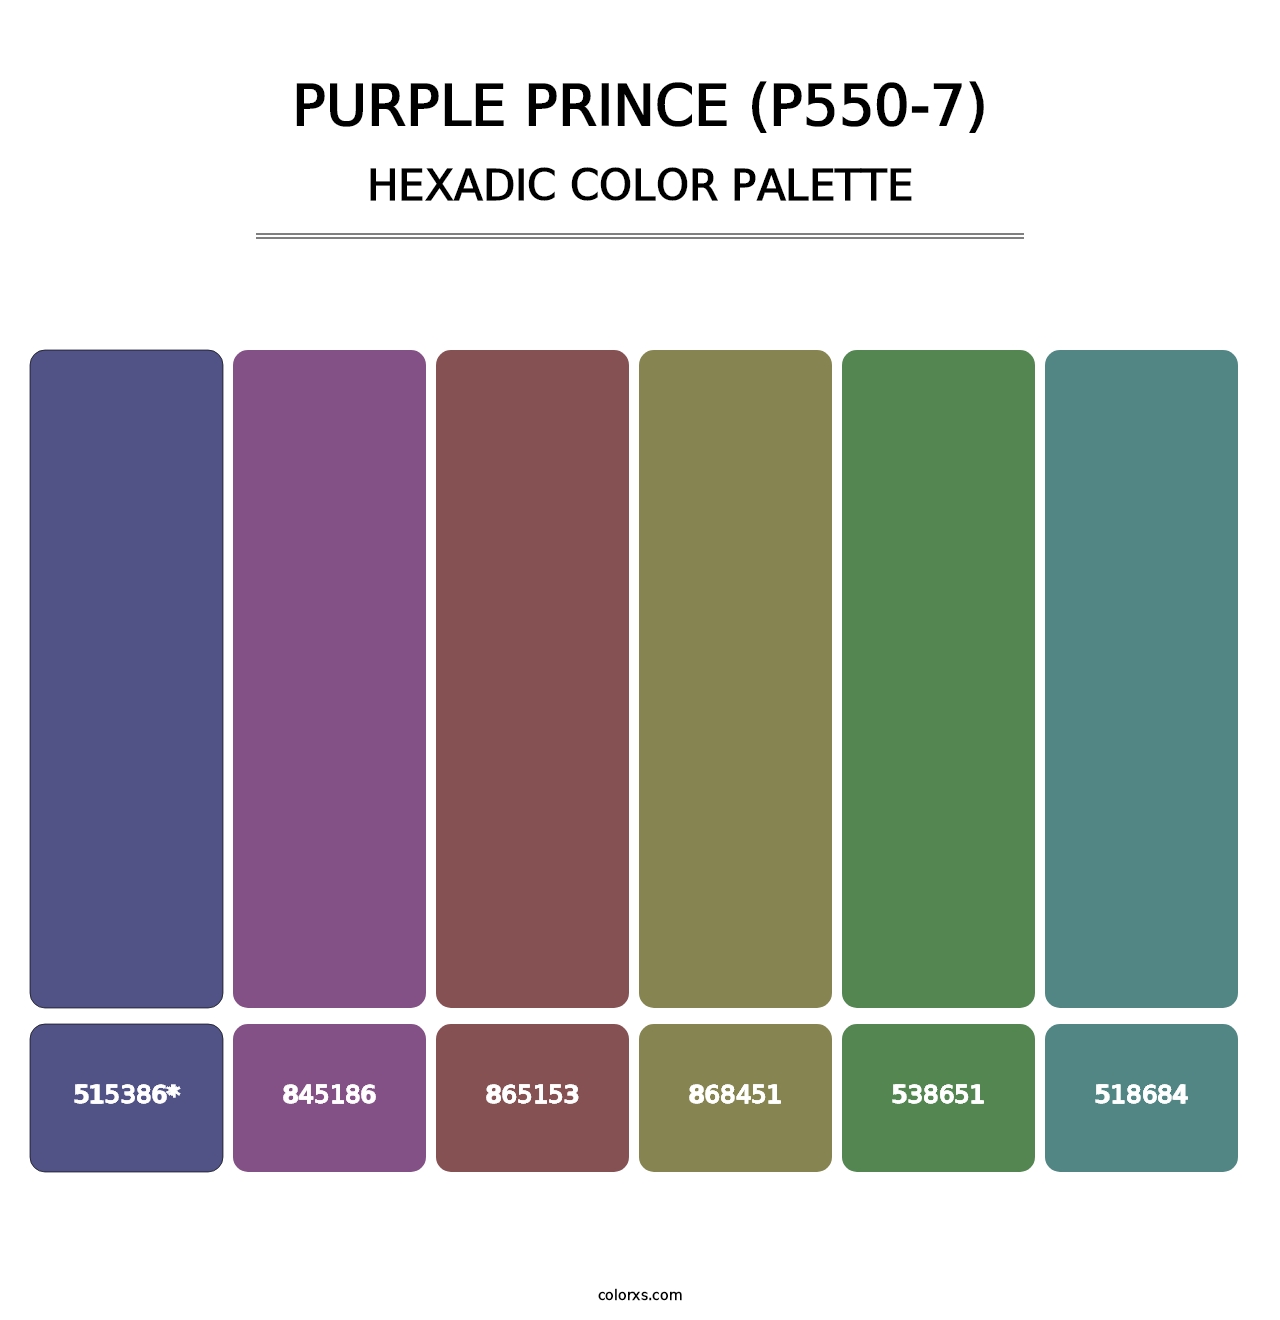 Purple Prince (P550-7) - Hexadic Color Palette